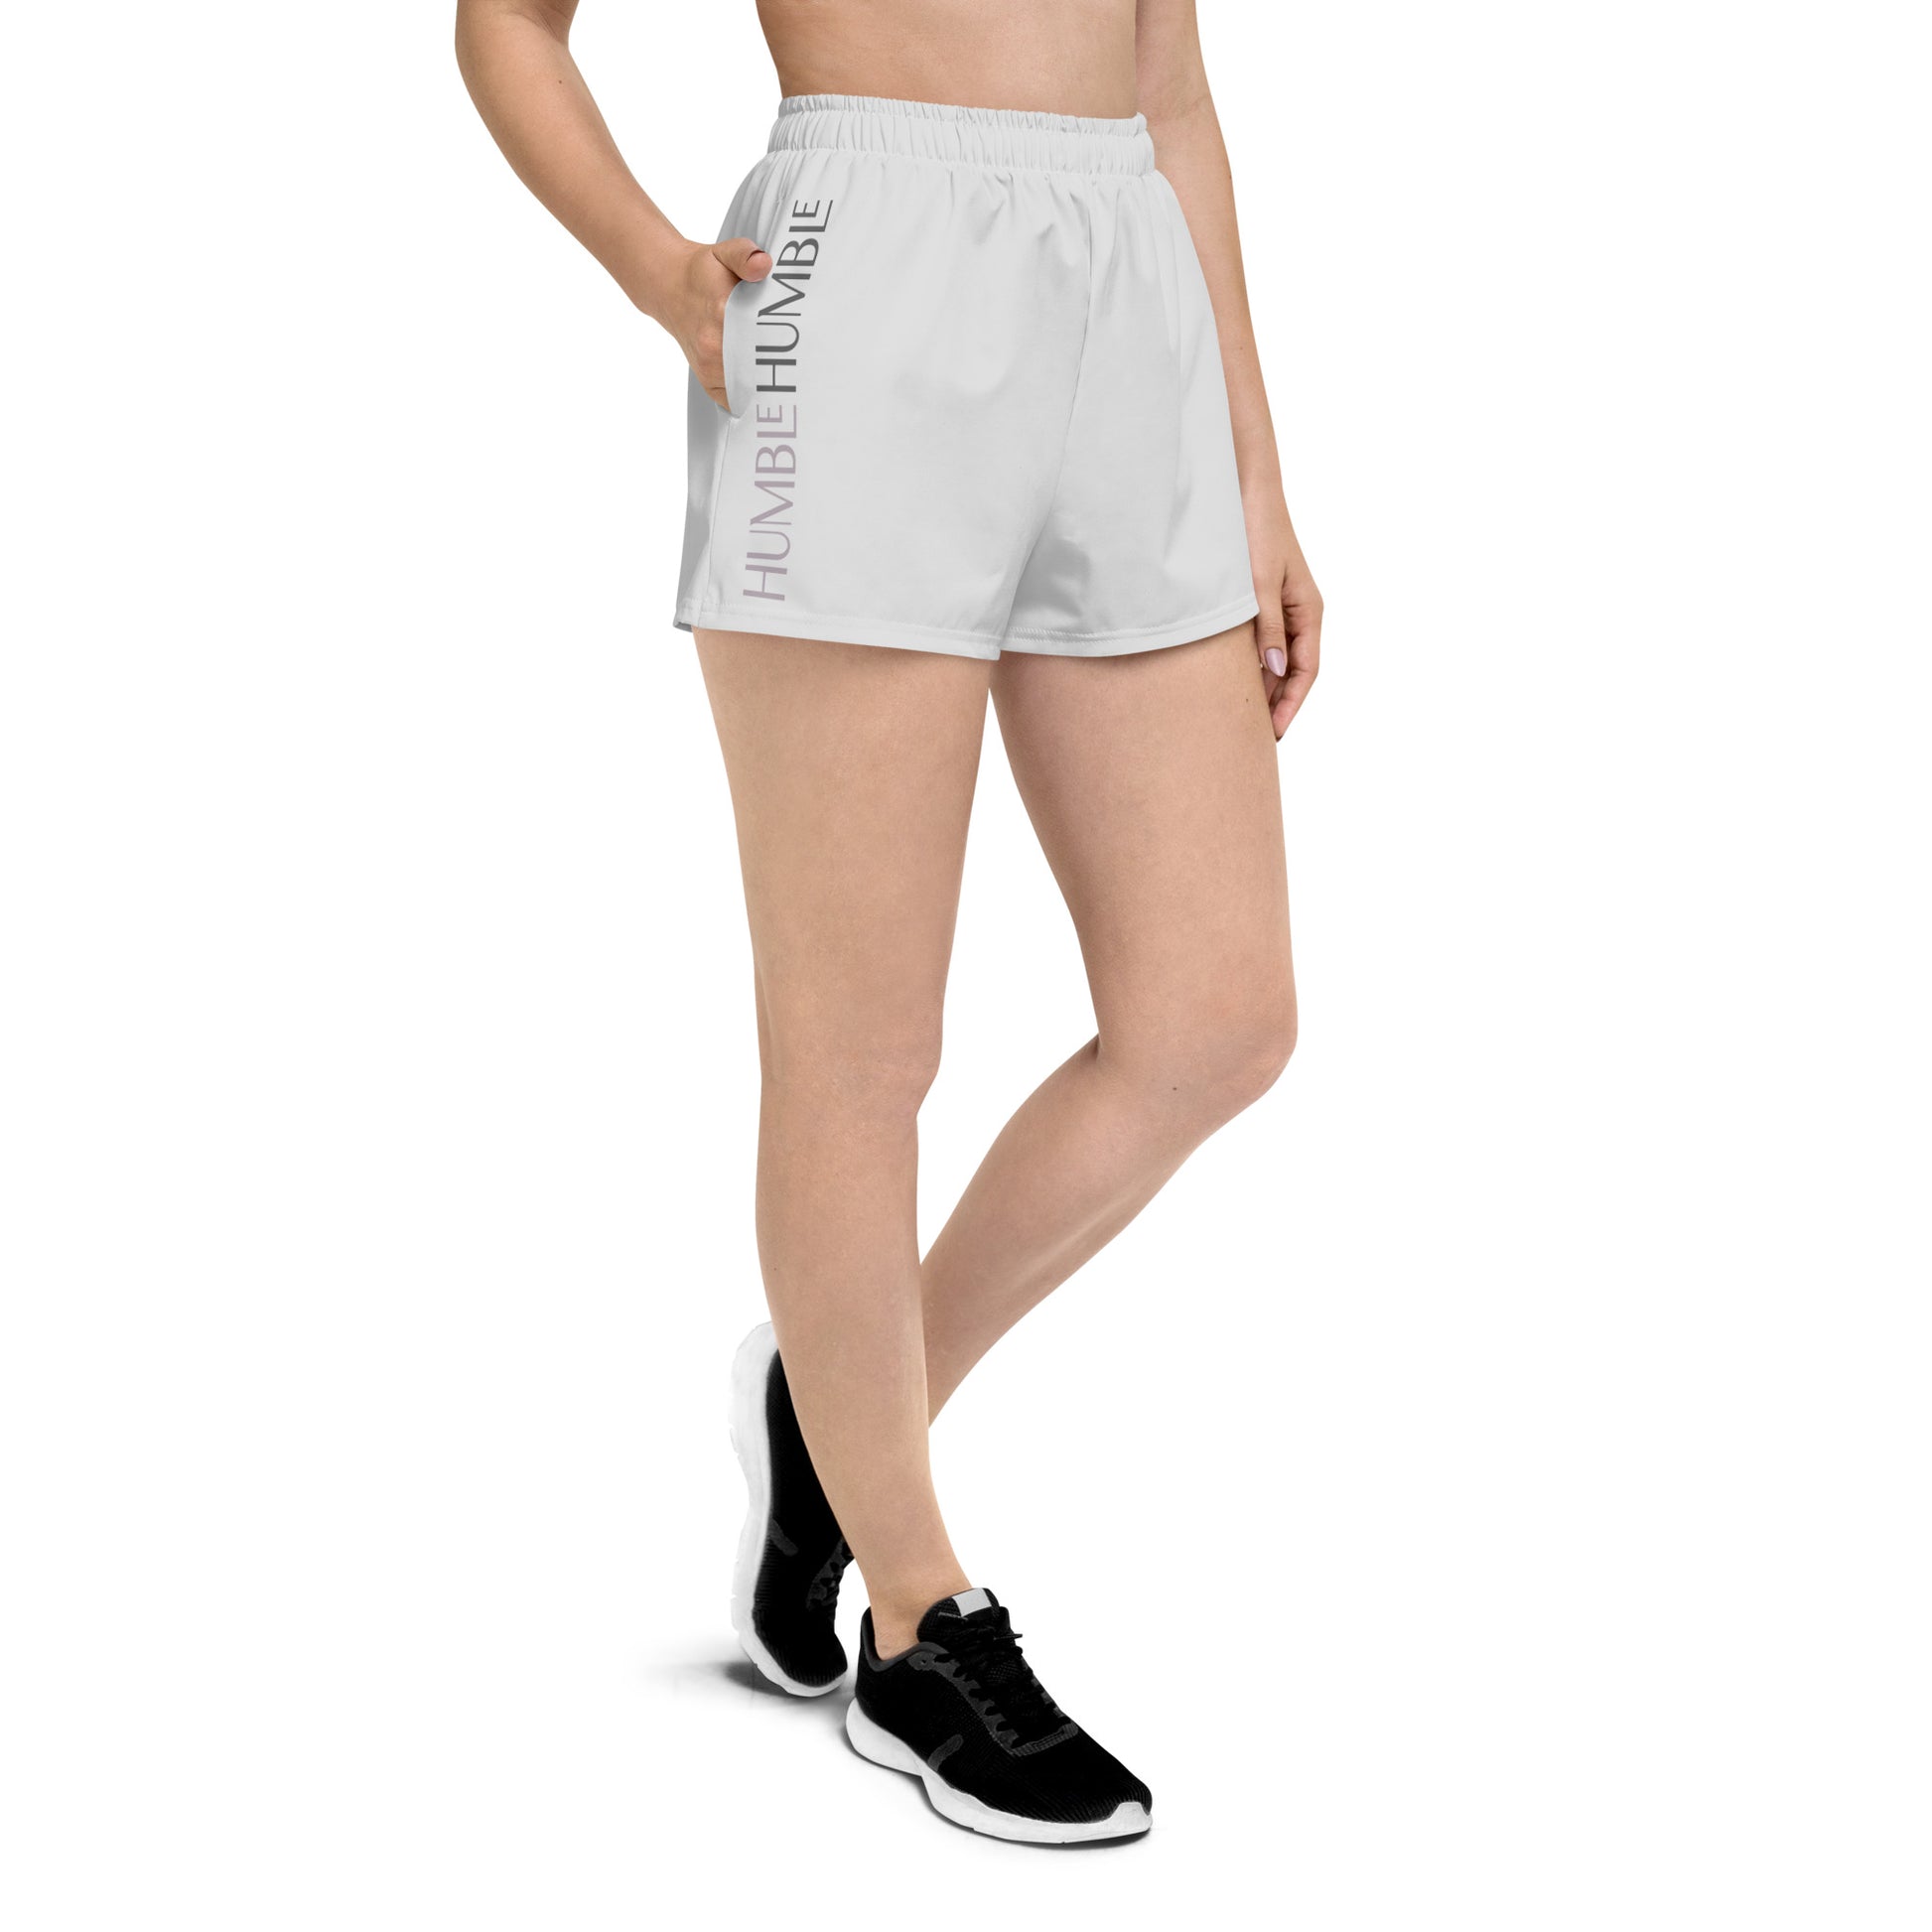 Humble Sportswear, women color match shorts, women’s running shorts, women’s recycled workout shorts 